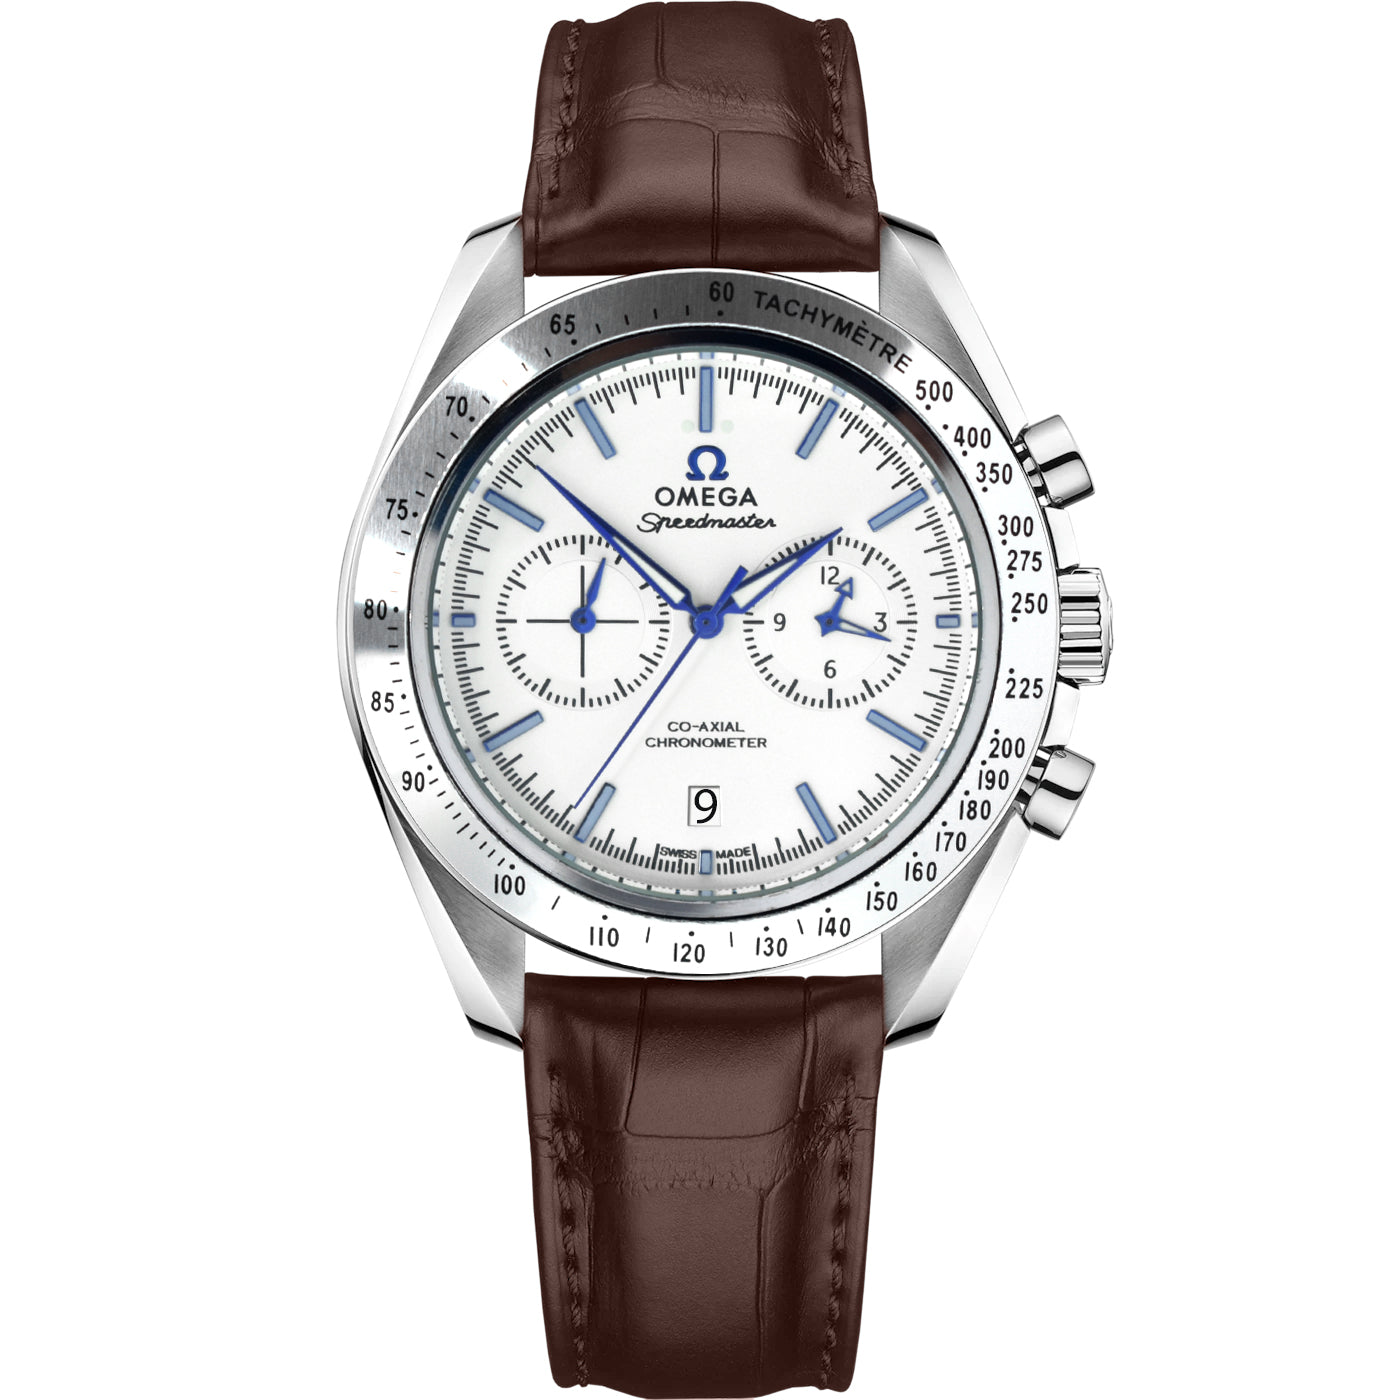 OMEGA Premium Quality Active Chronograph Quartz Watch | OMGA Watch CS 2099 B